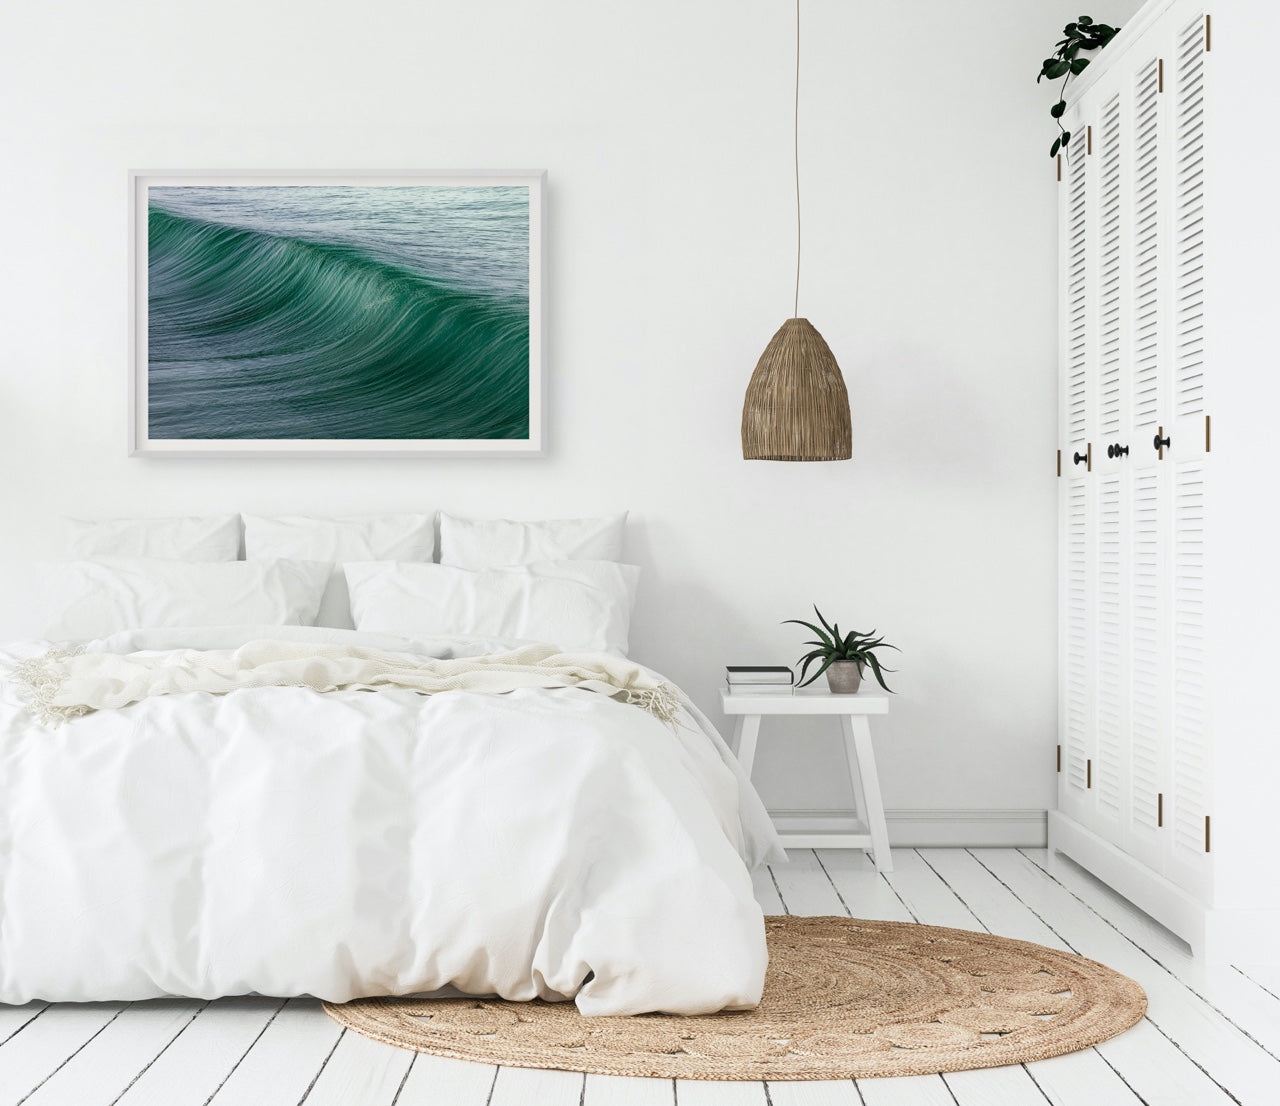 Abstract Ocean Wall Art in Bedroom